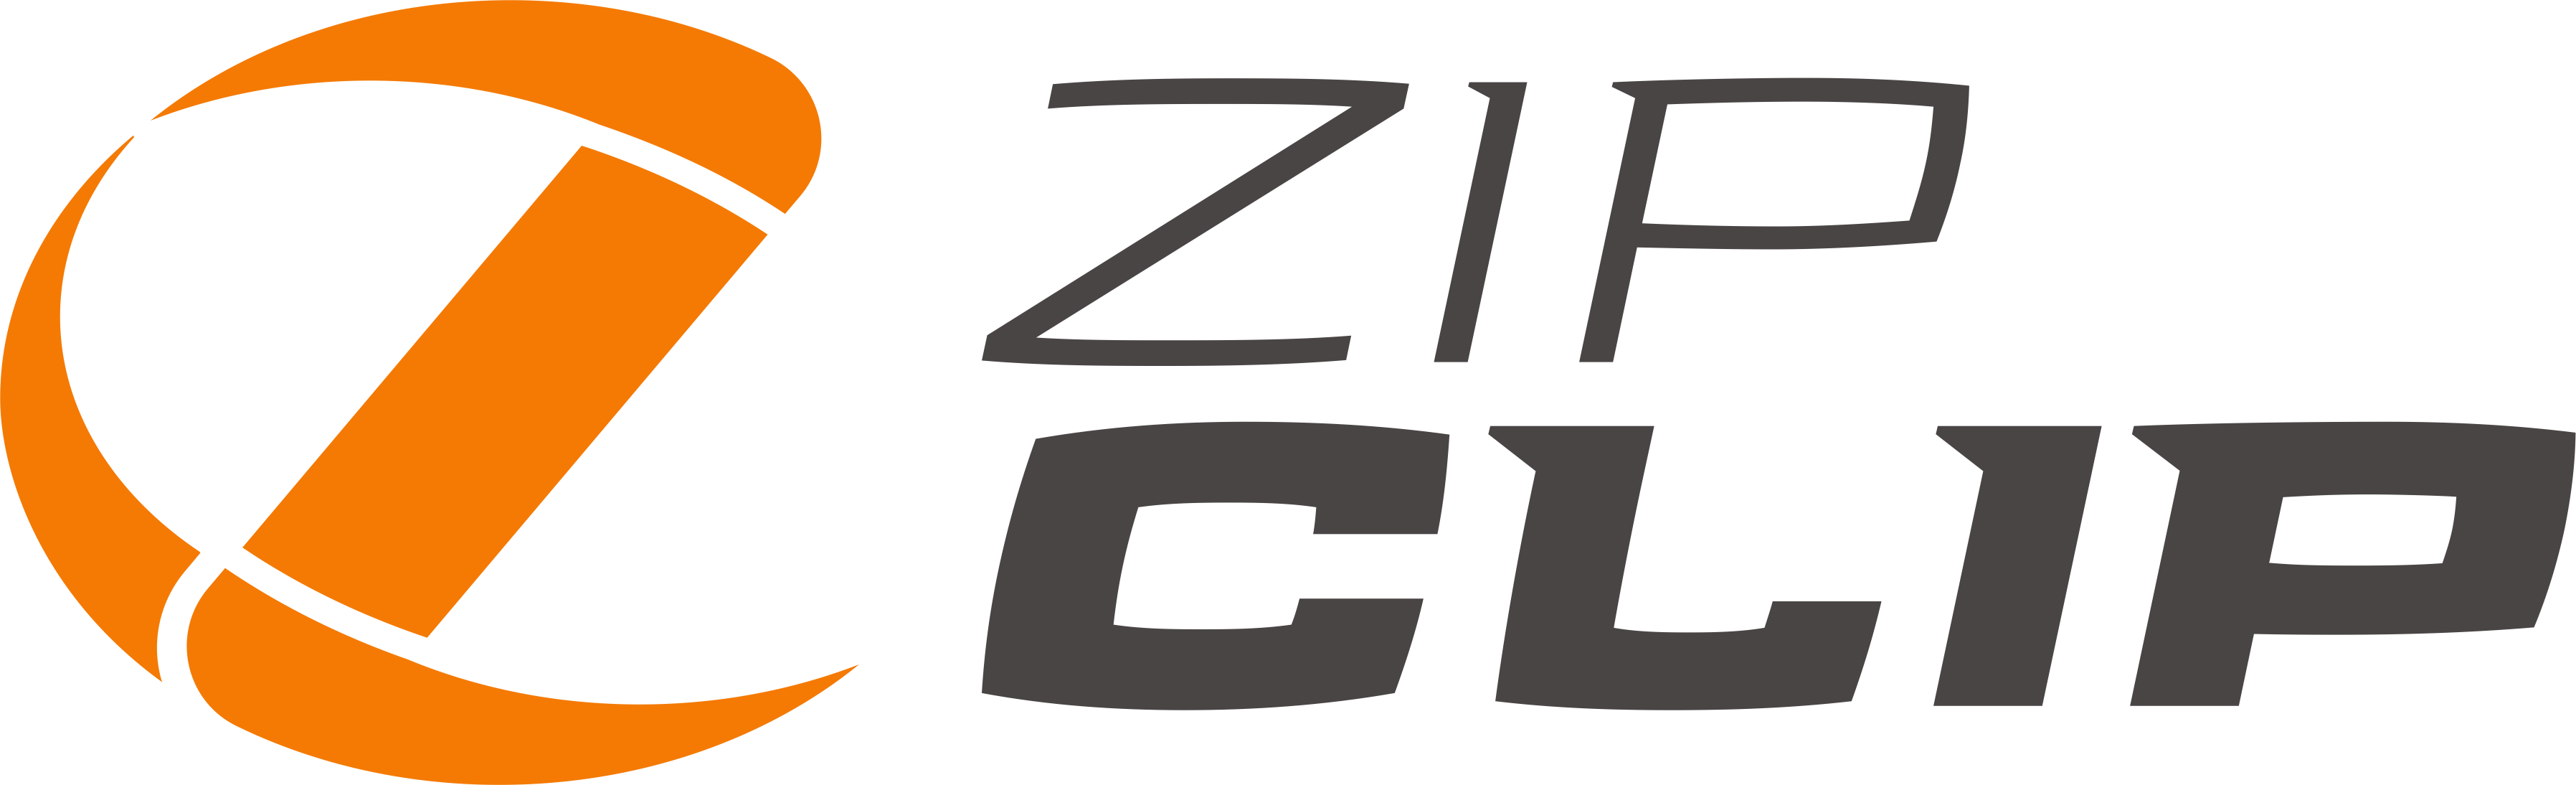 ZIP-CLIP (exclusivo)